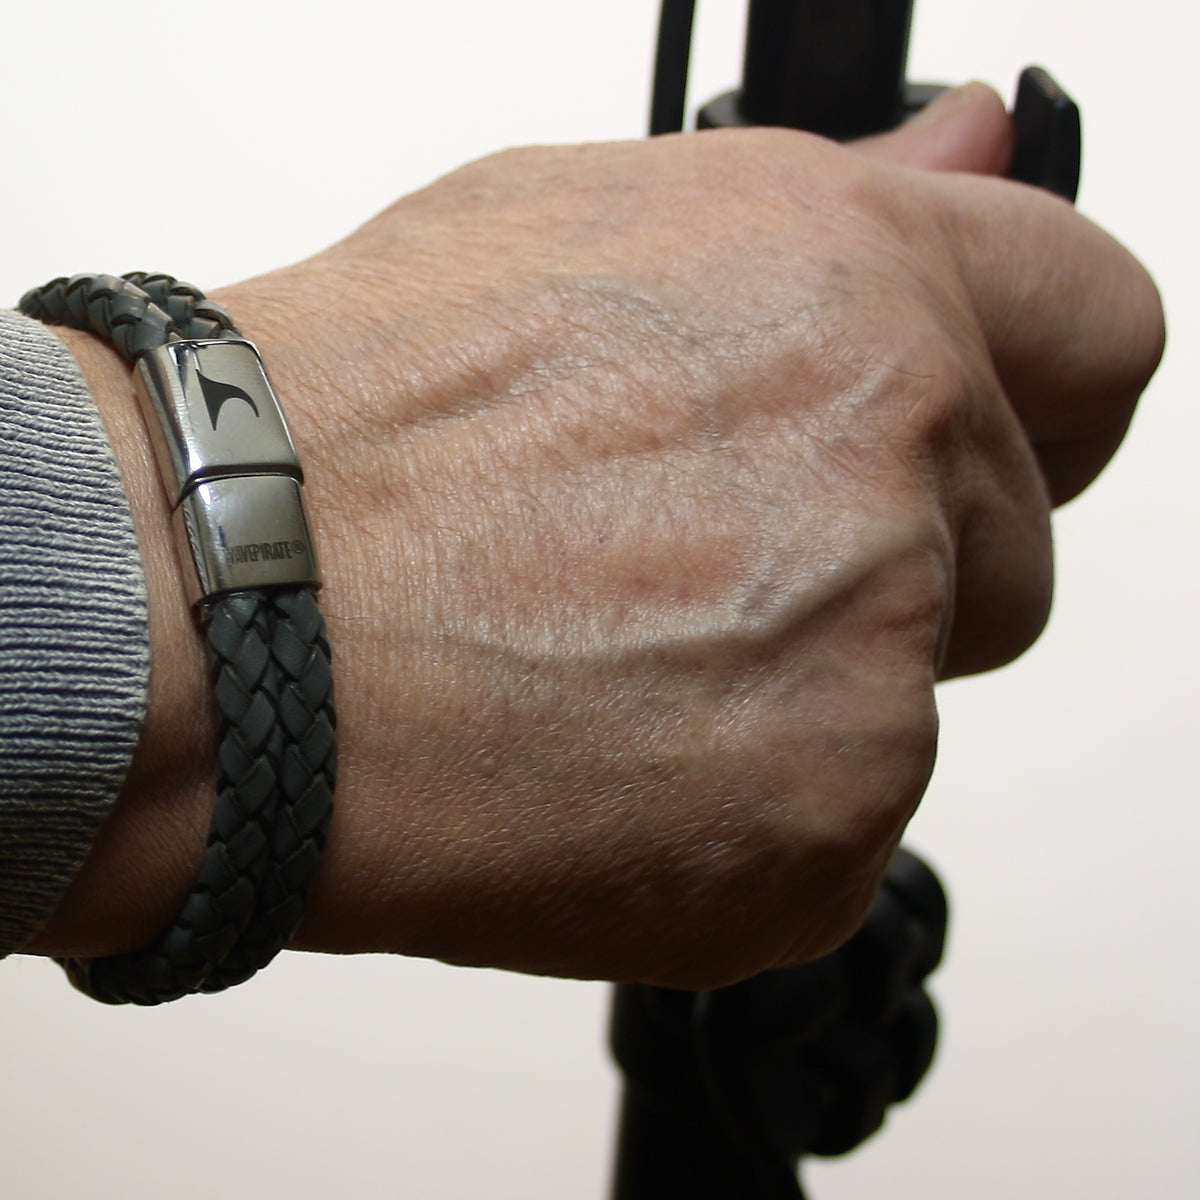 Herren-Leder-Armband-xo-dunkelgrau-geflochten-Edelstahlverschluss-getragen-wavepirate-shop-f-1